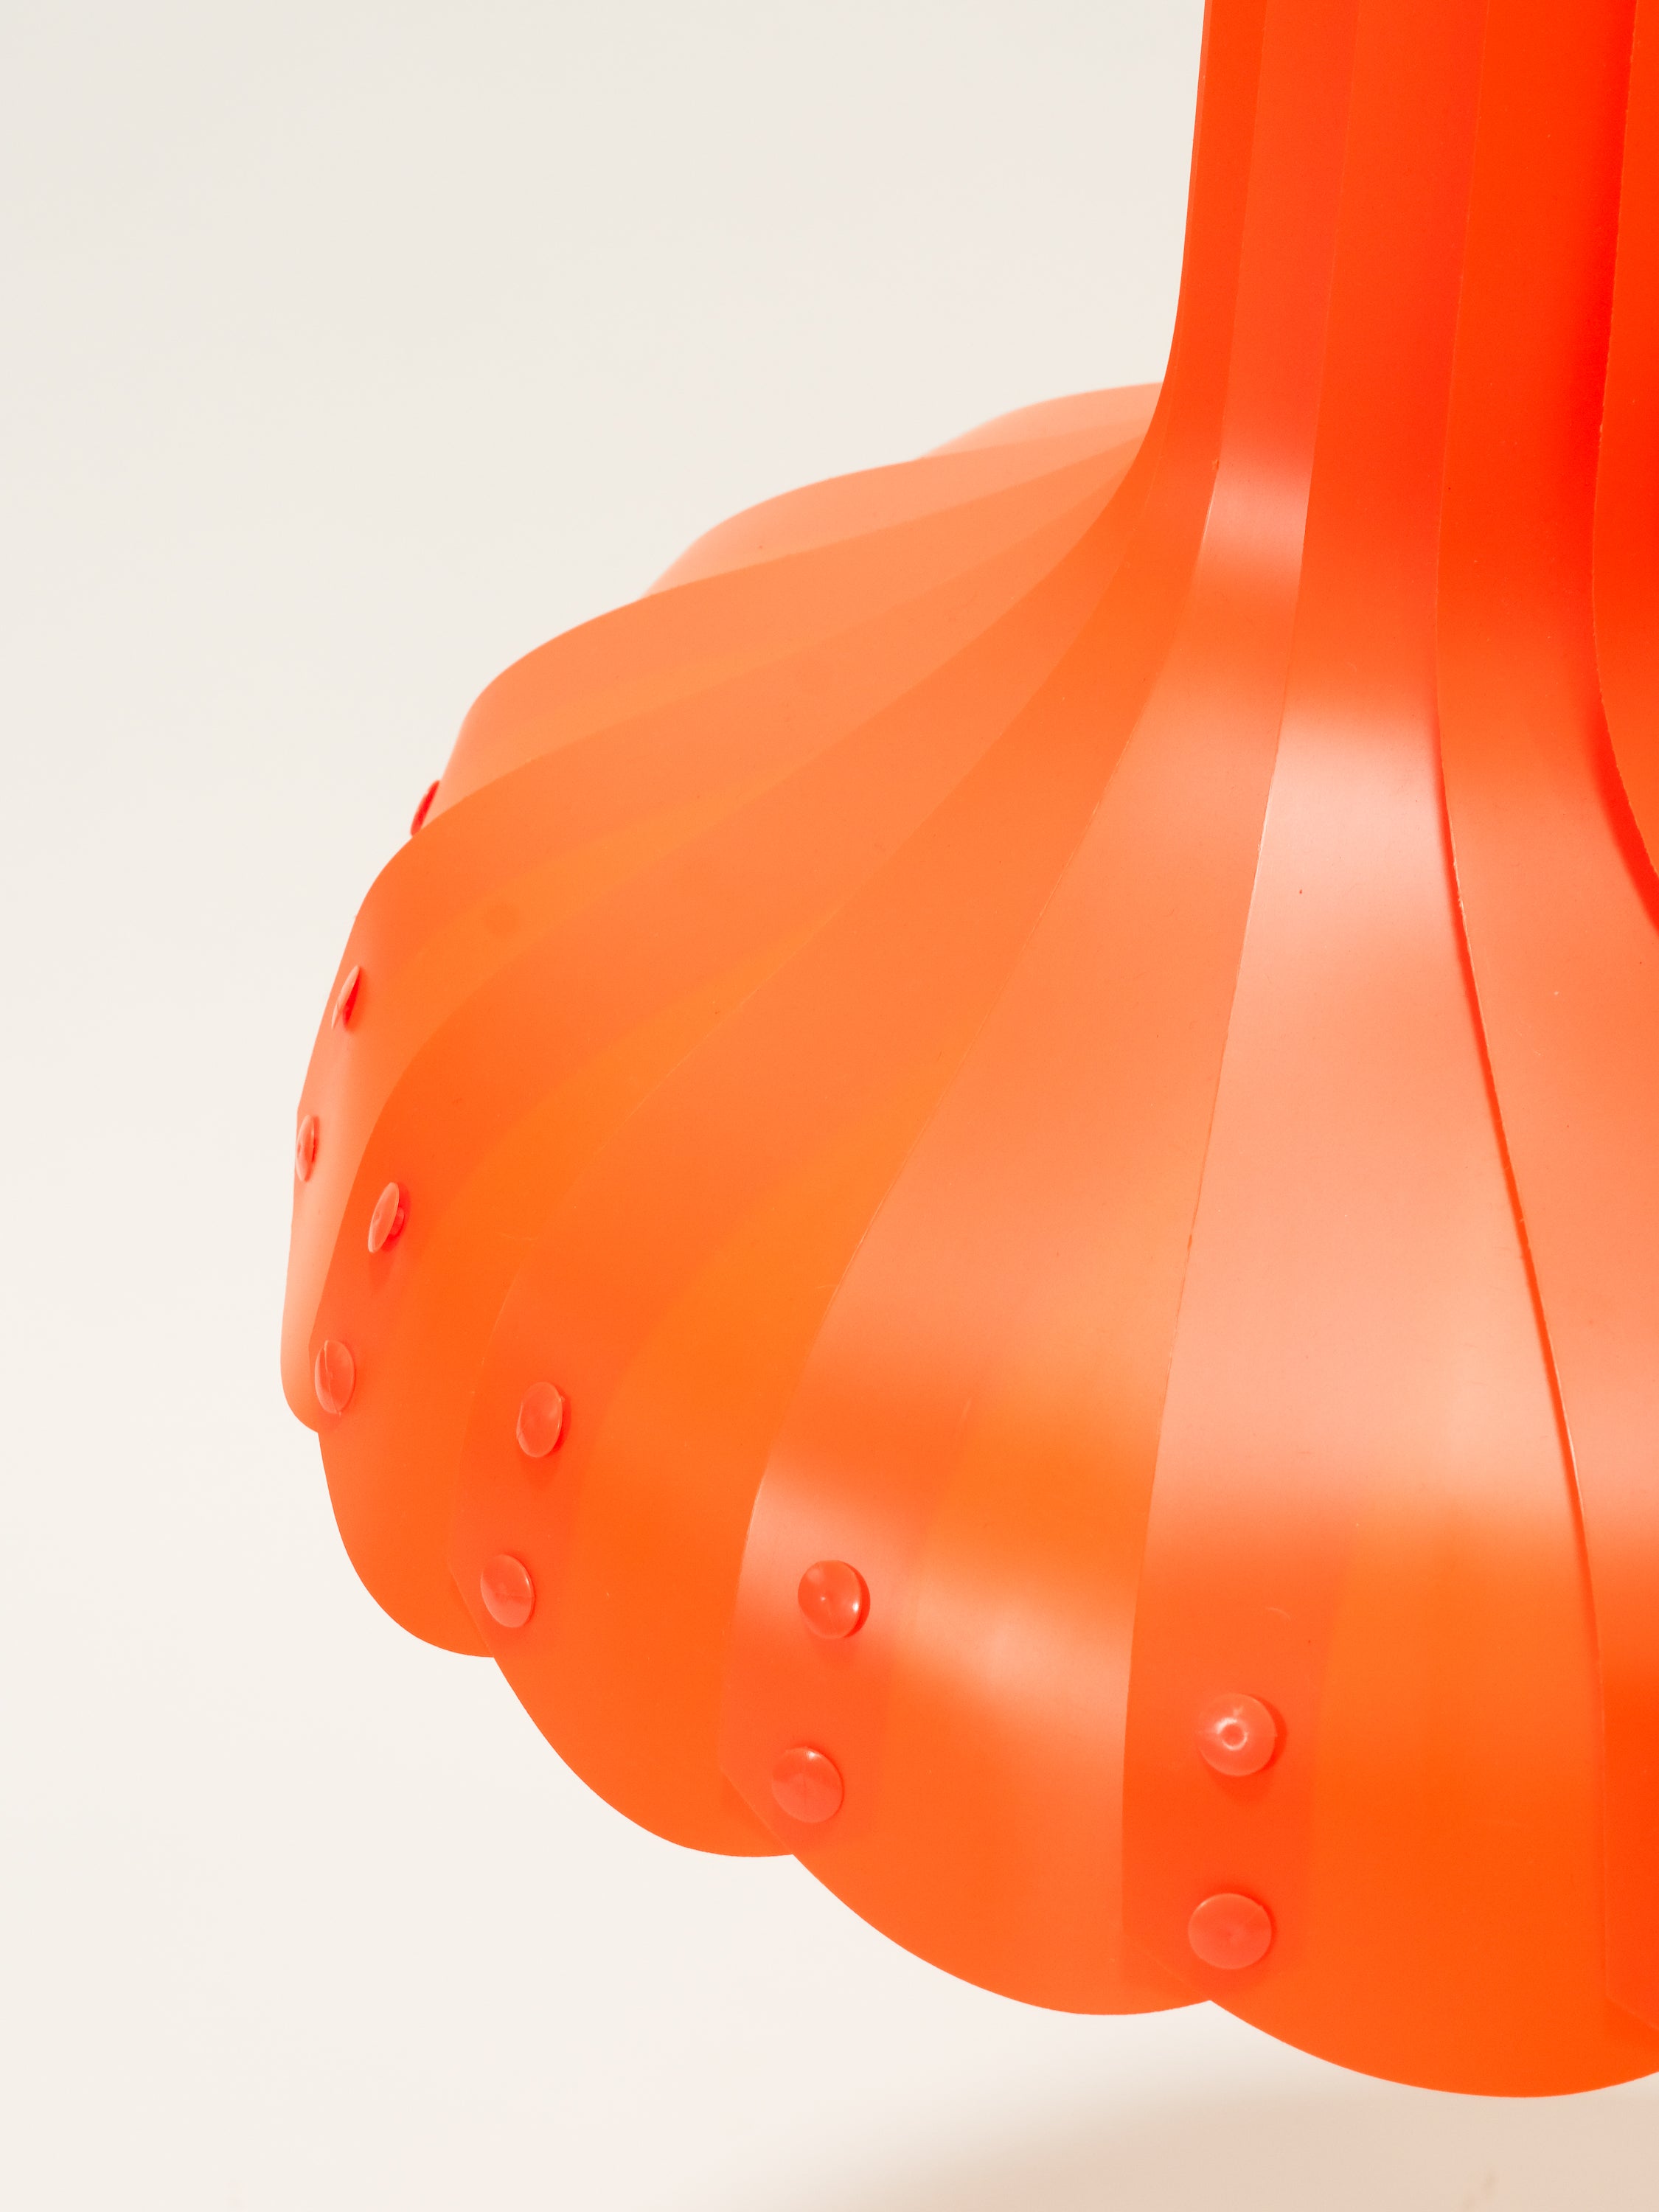 Orange Model TN 70 Ceiling Lamp by Hans-Agne Jakobsson, Markaryd, Sweden